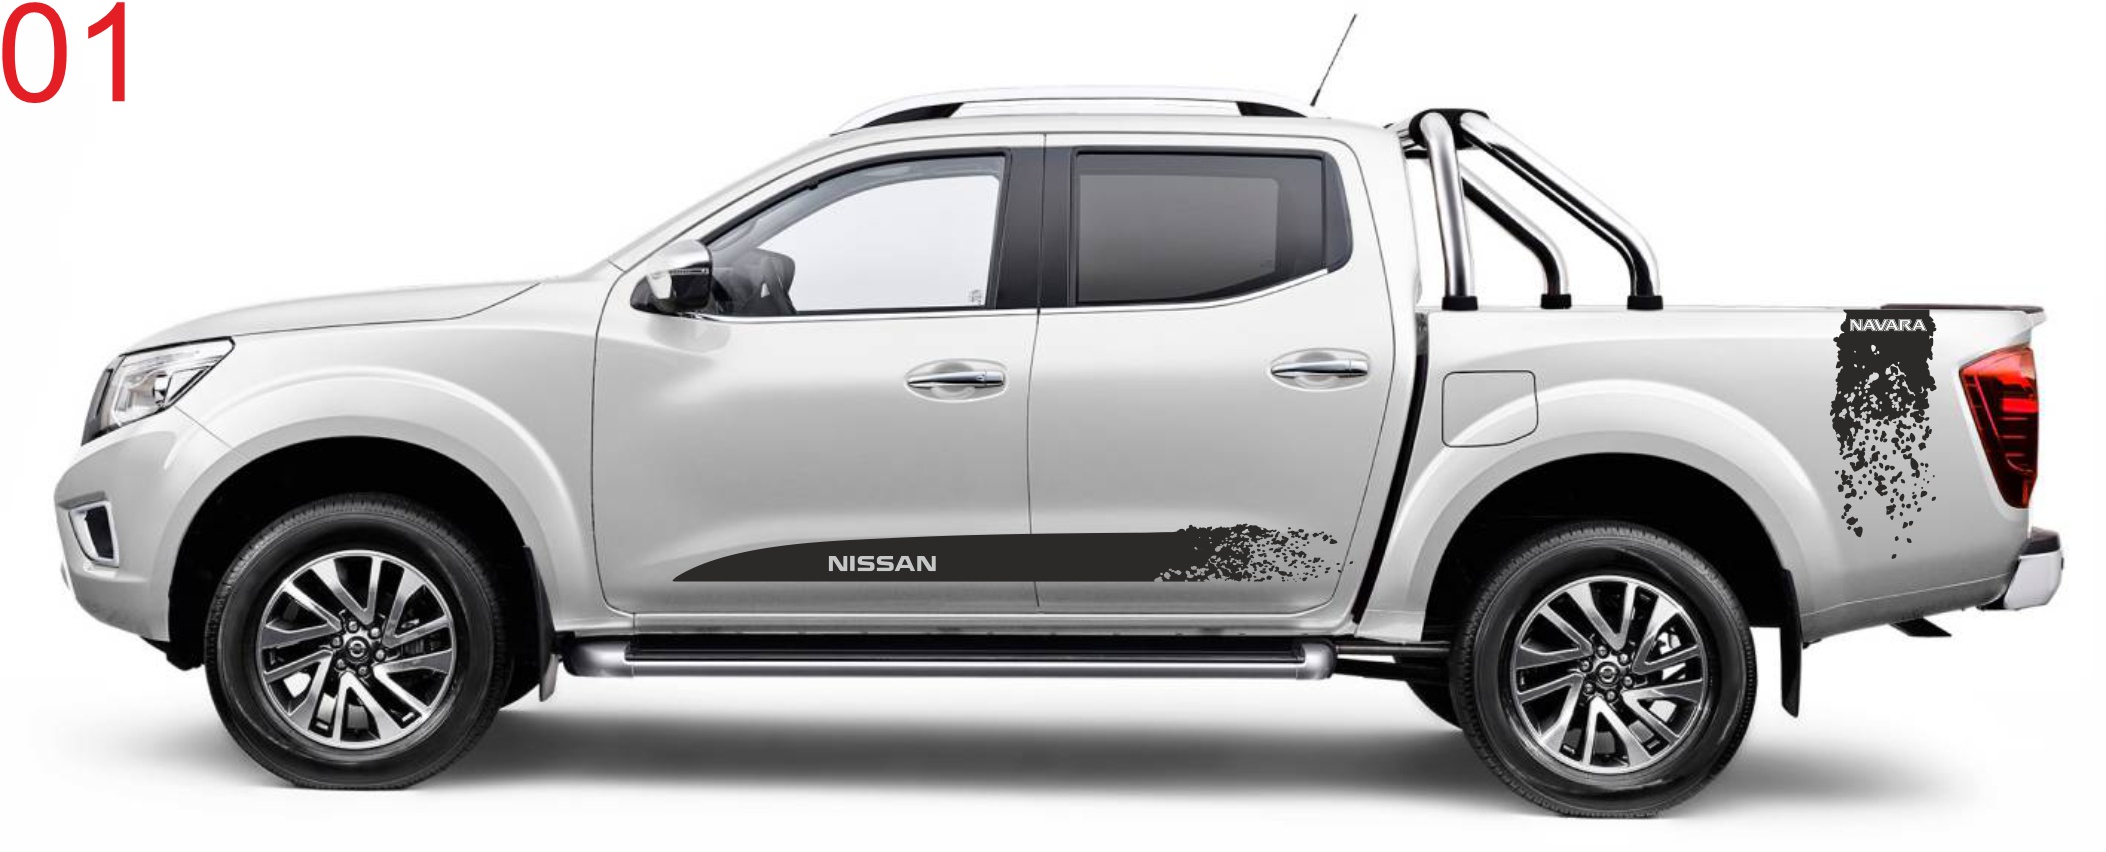 Nissan Navara naklejki decals stripes sticker aufkleber nalepky